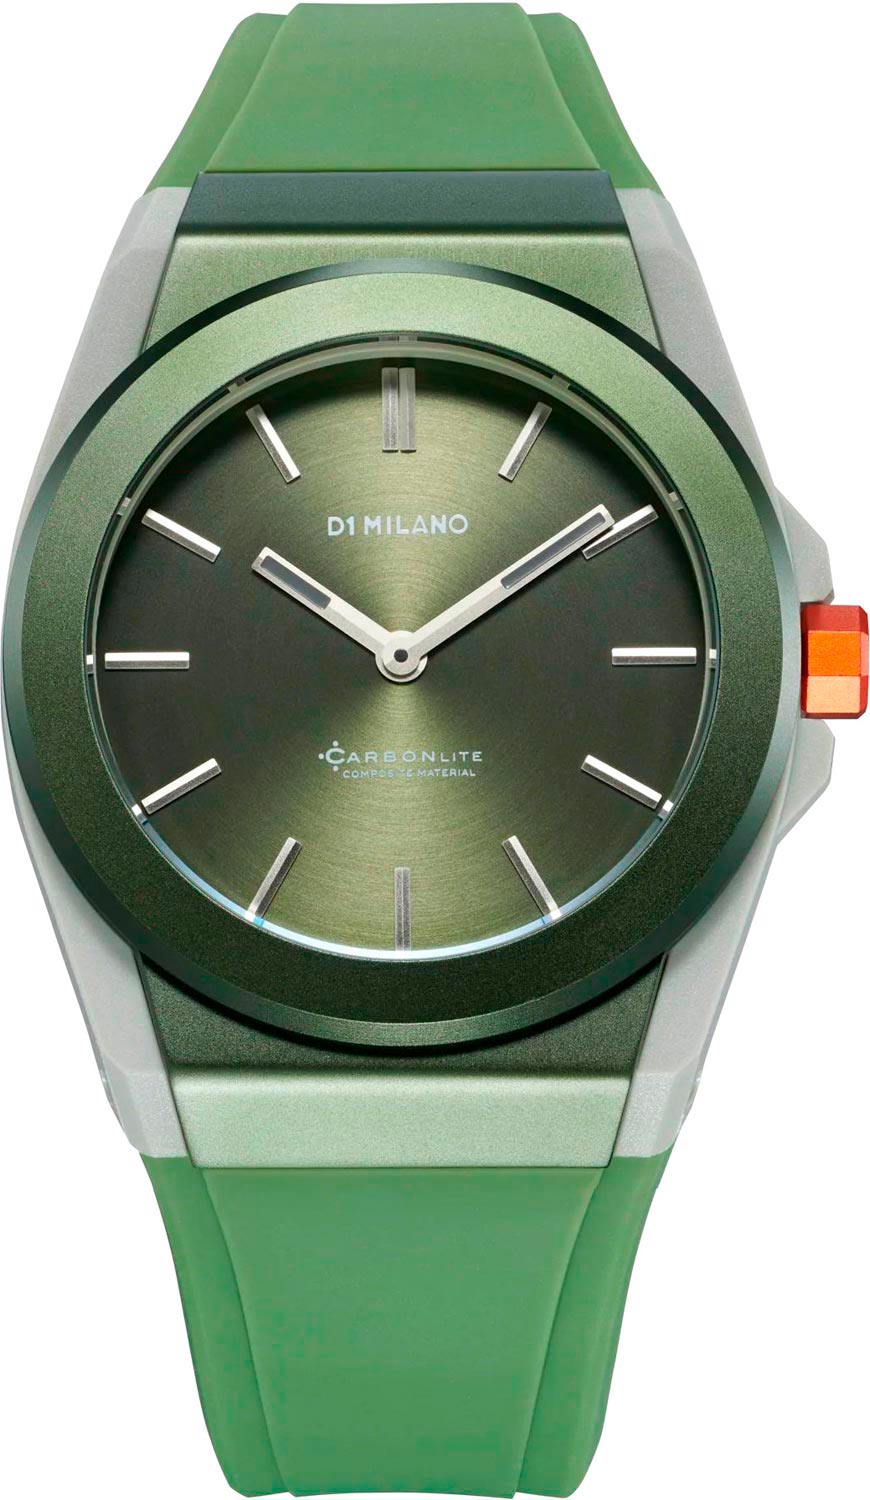 Наручные часы мужские D1 Milano CLRJ06